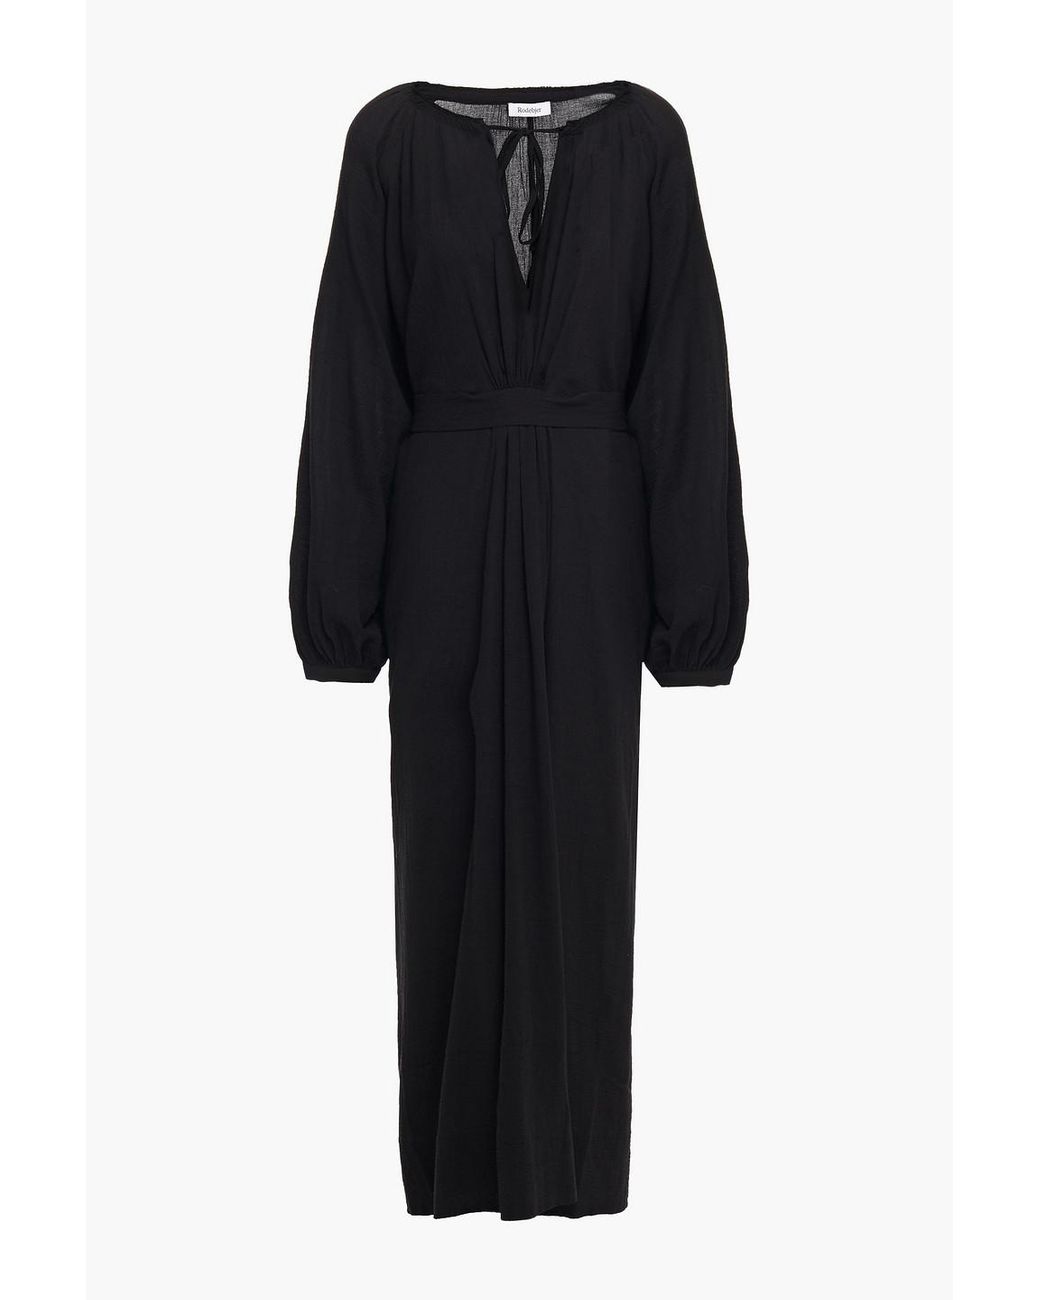 Rodebjer Endre Gathered Crinkled-cotton Midi Dress in Black | Lyst Australia